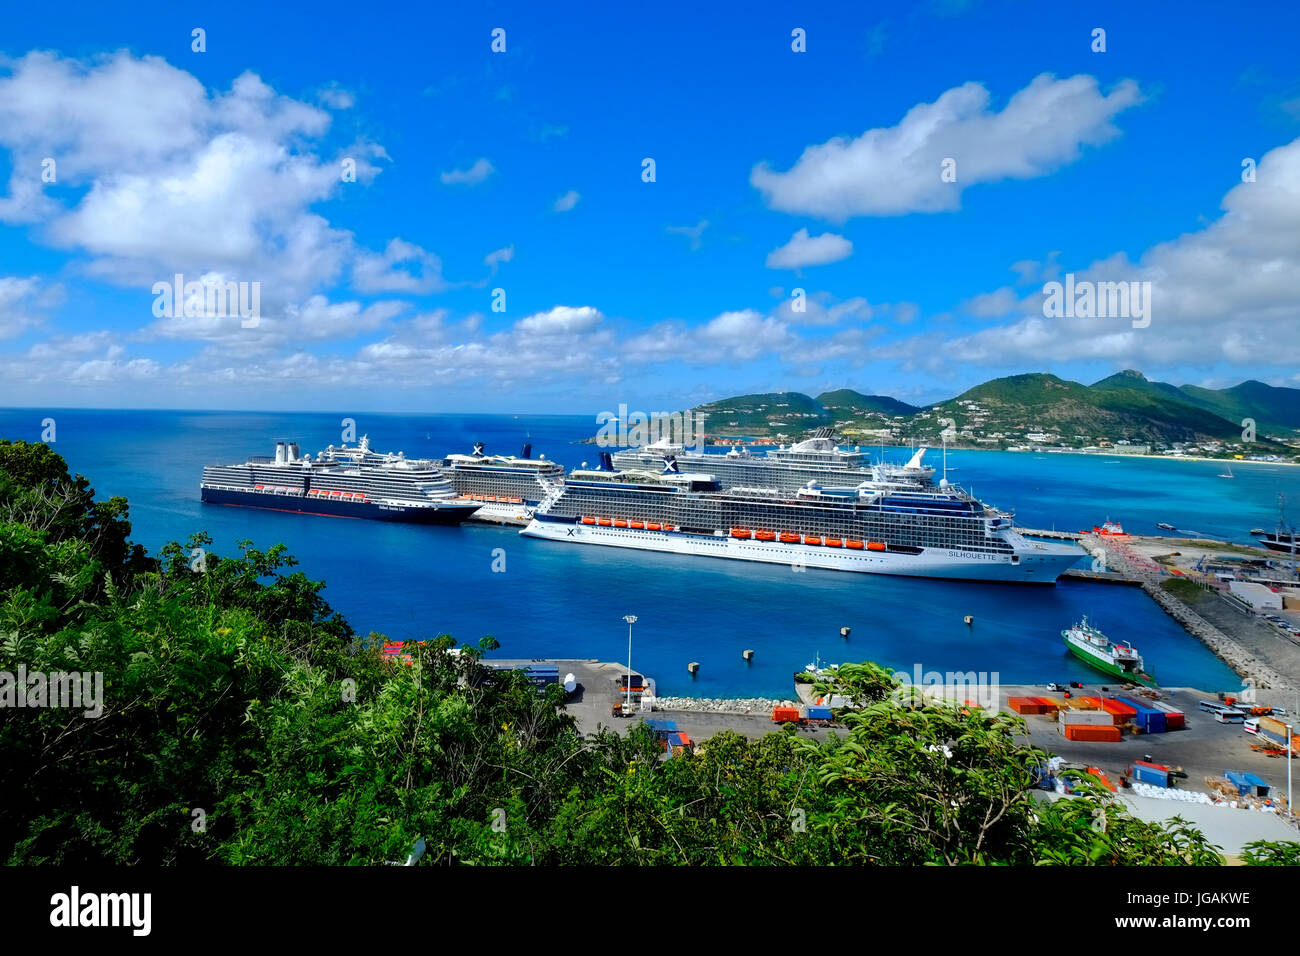 St Maarten Caribbean Cruise Celebrity line Island Vista Southern Caribbean Island Cruise from Miami Florida Stock Photo